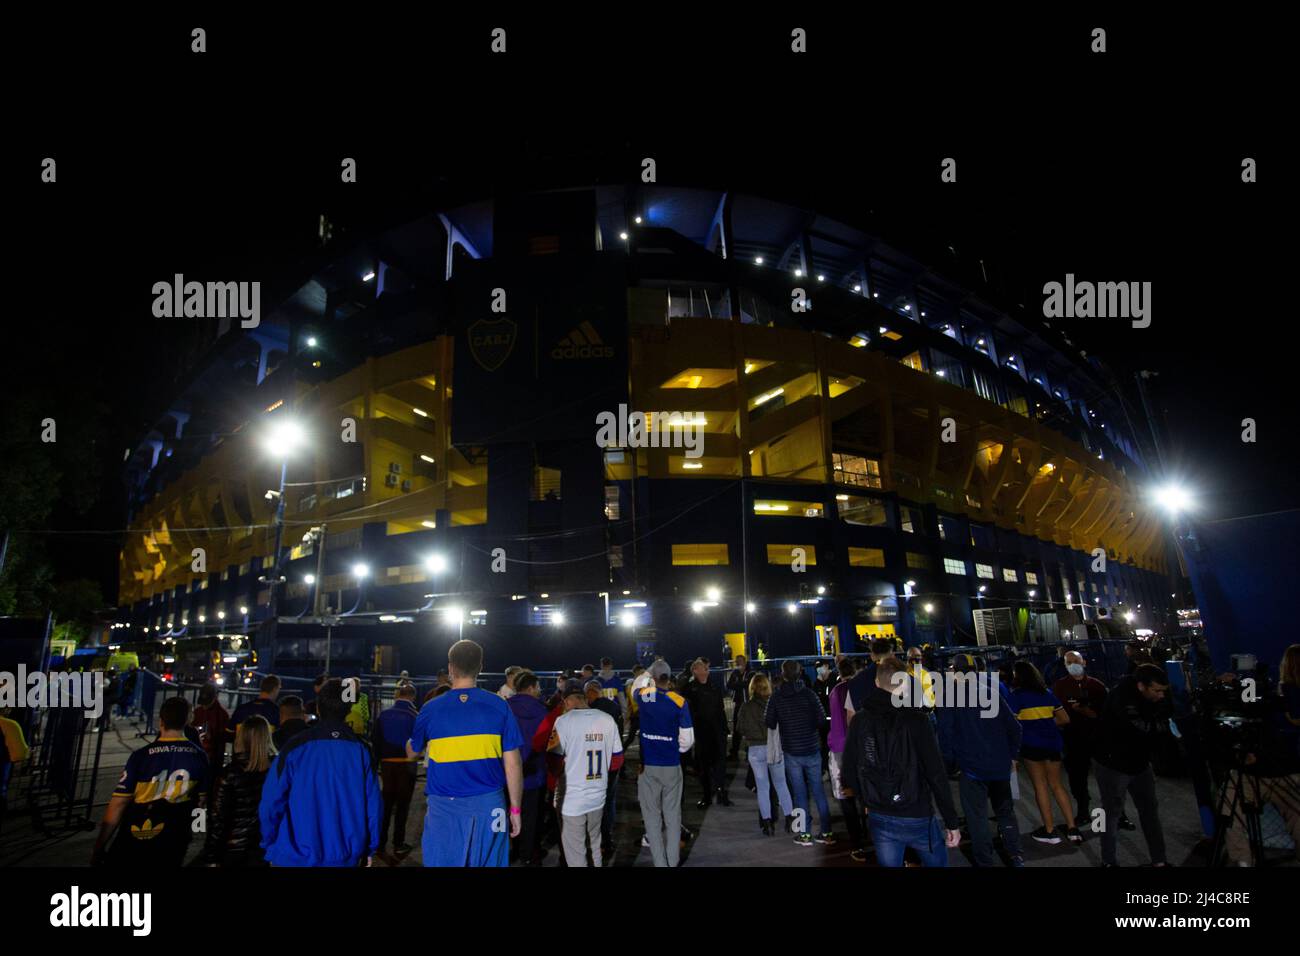 BUENOS AIRES, ARGENTINE - AVRIL 3 : vue générale du stade de Boca Juniors dans le cadre de la Copa de la Liga 2022 au stade Alberto J. Armando, la BOM Banque D'Images